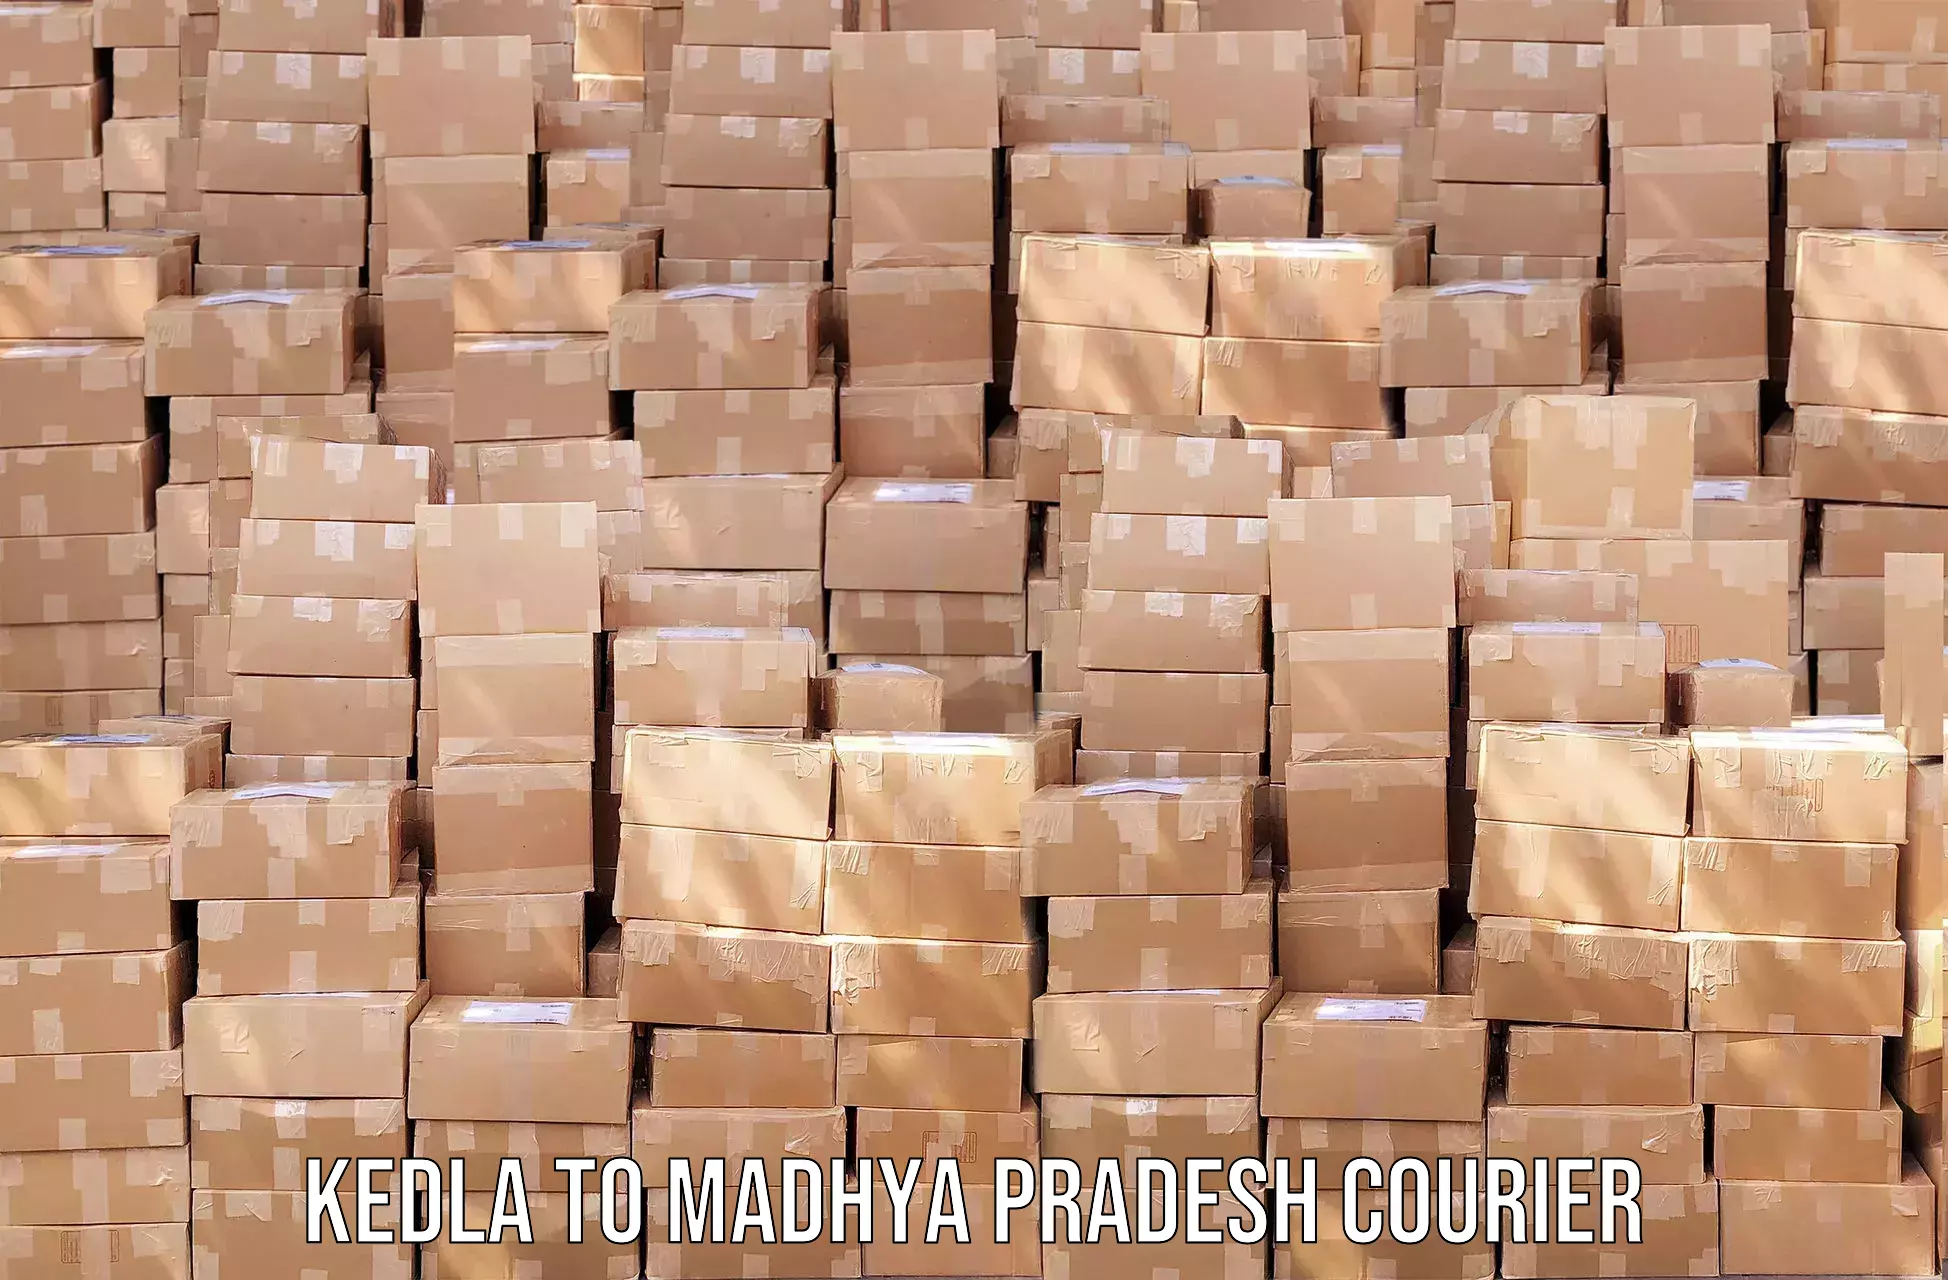 Cost-effective shipping solutions Kedla to Ashoknagar